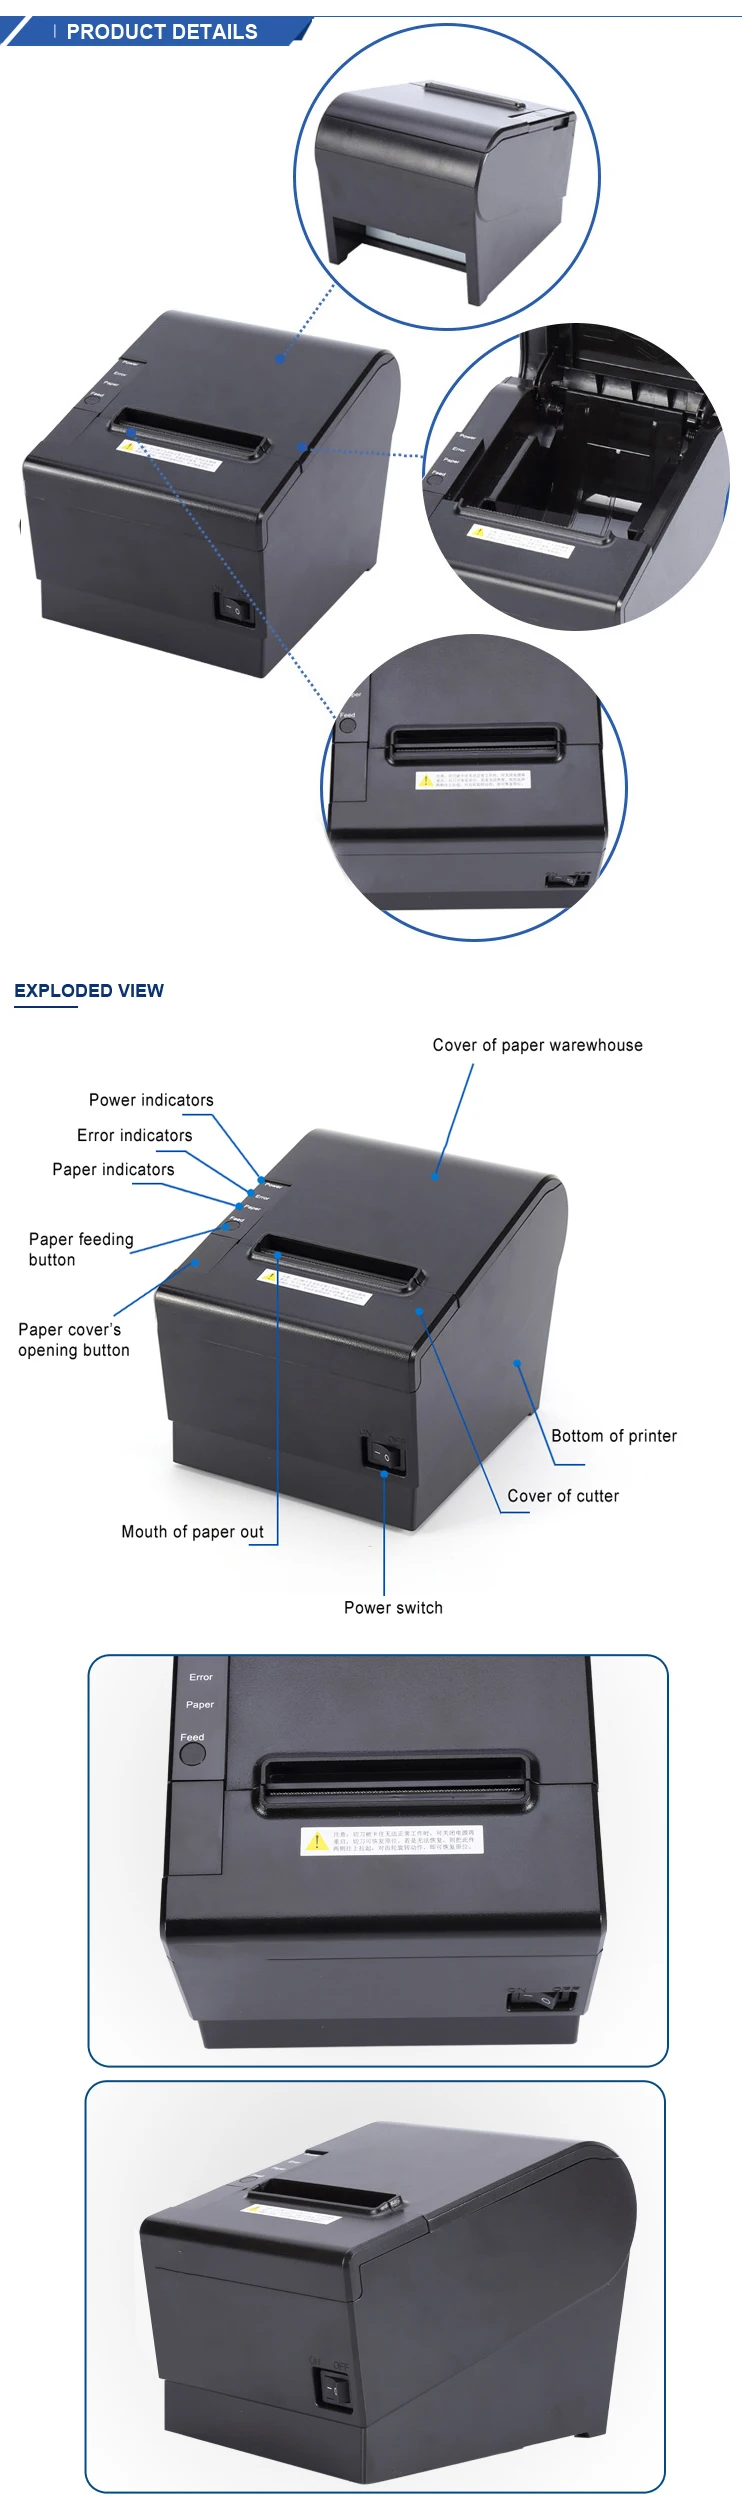 printer basics voucher code